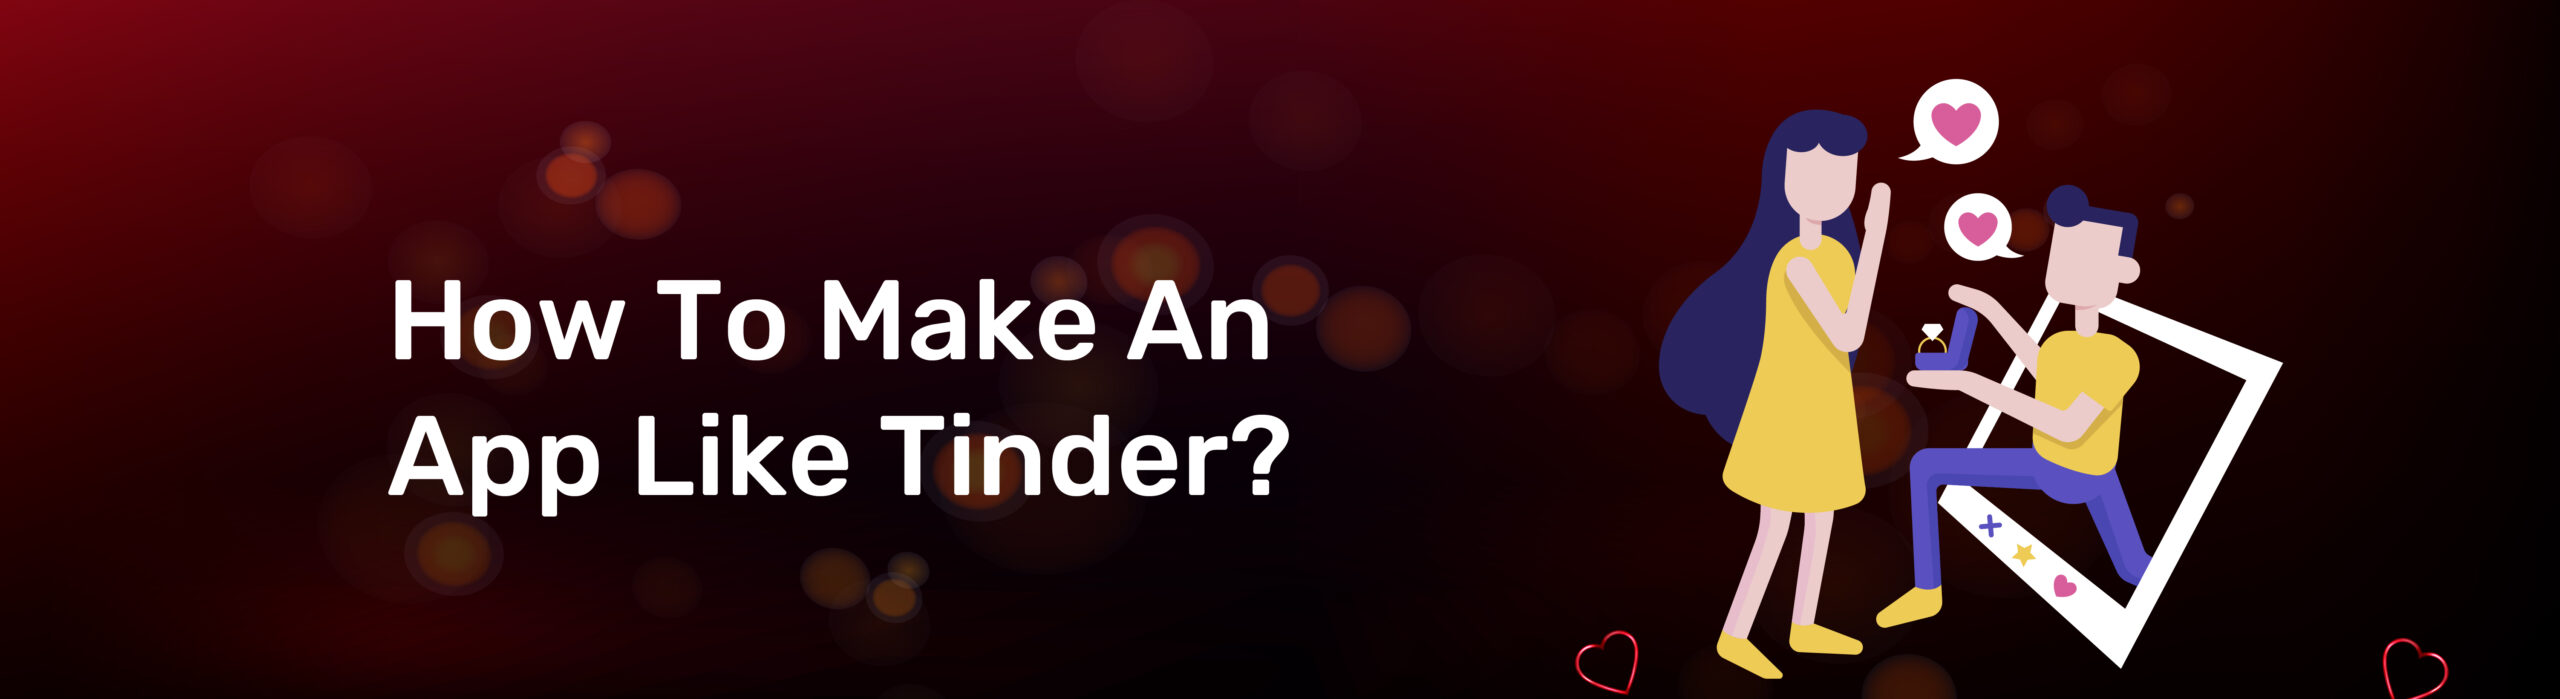 How to Make an App like Tinder?